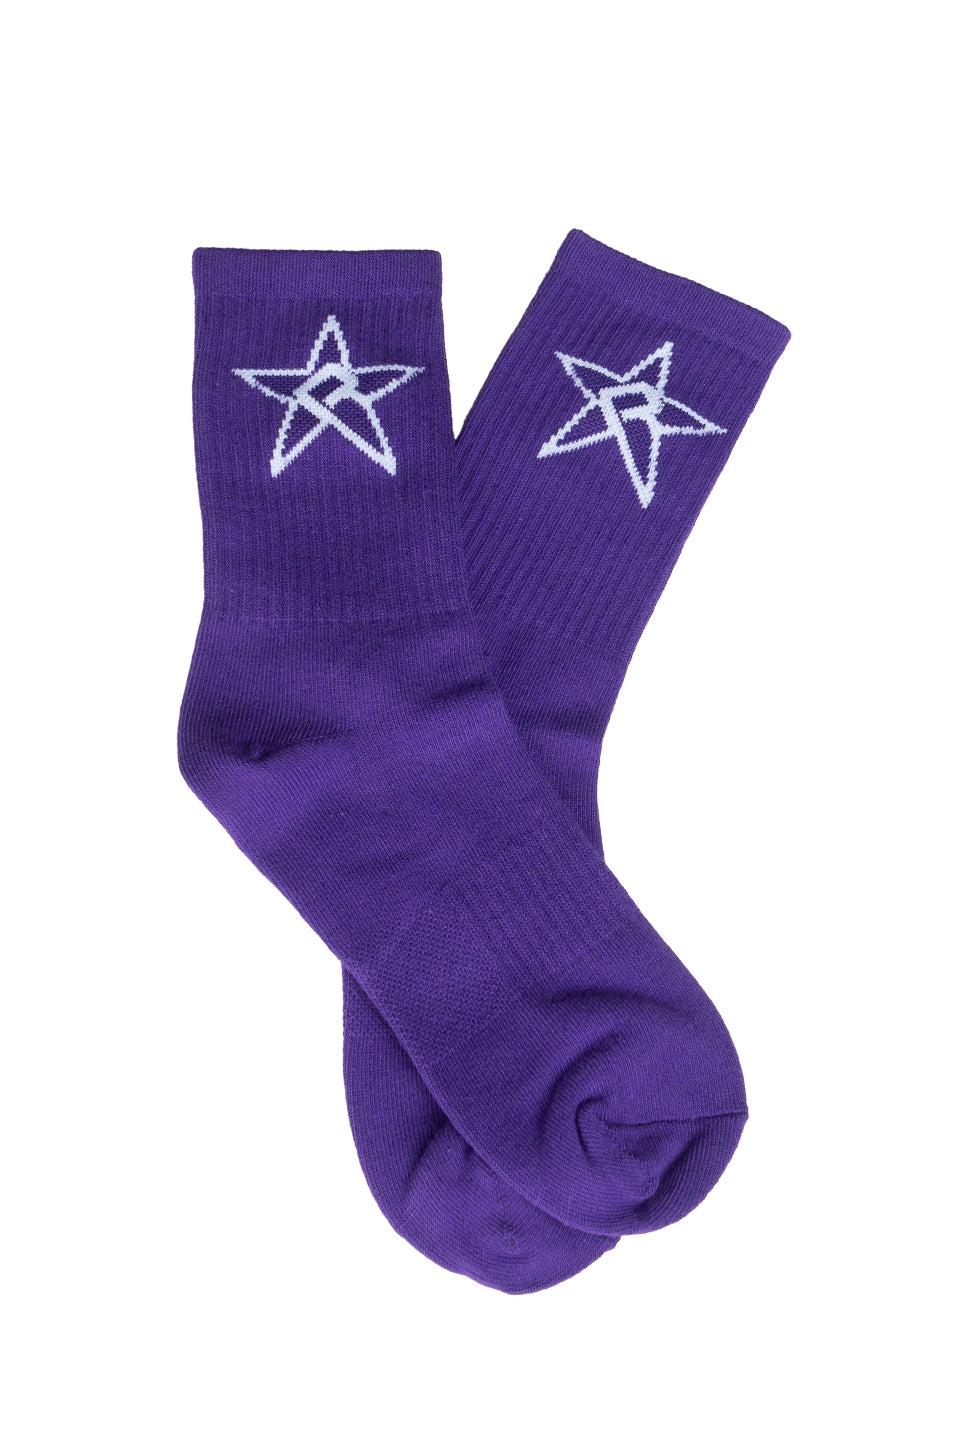 Rebel Crew Socks in Purple Youth – Rebel Athletic